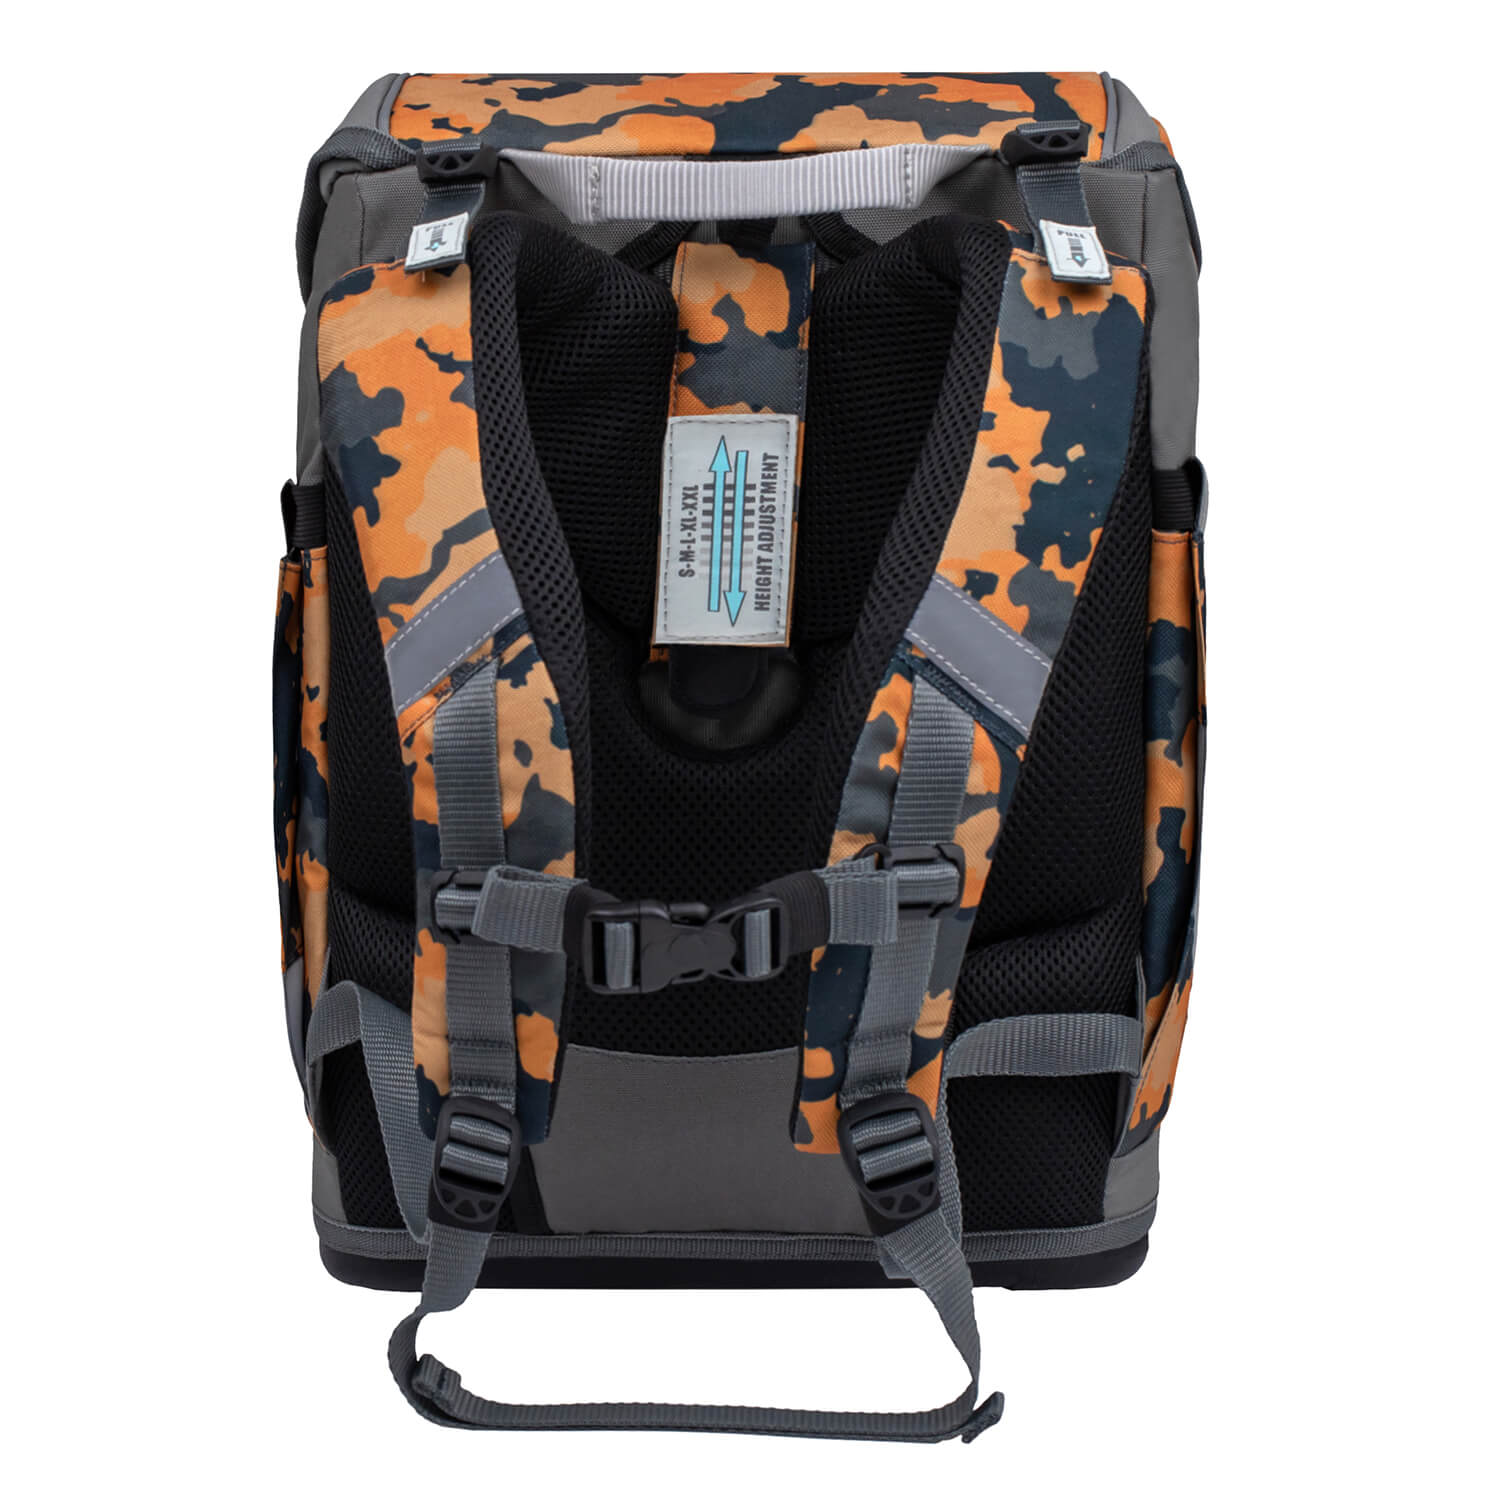 Smarty Orange Camouflage schoolbag set 5 pcs